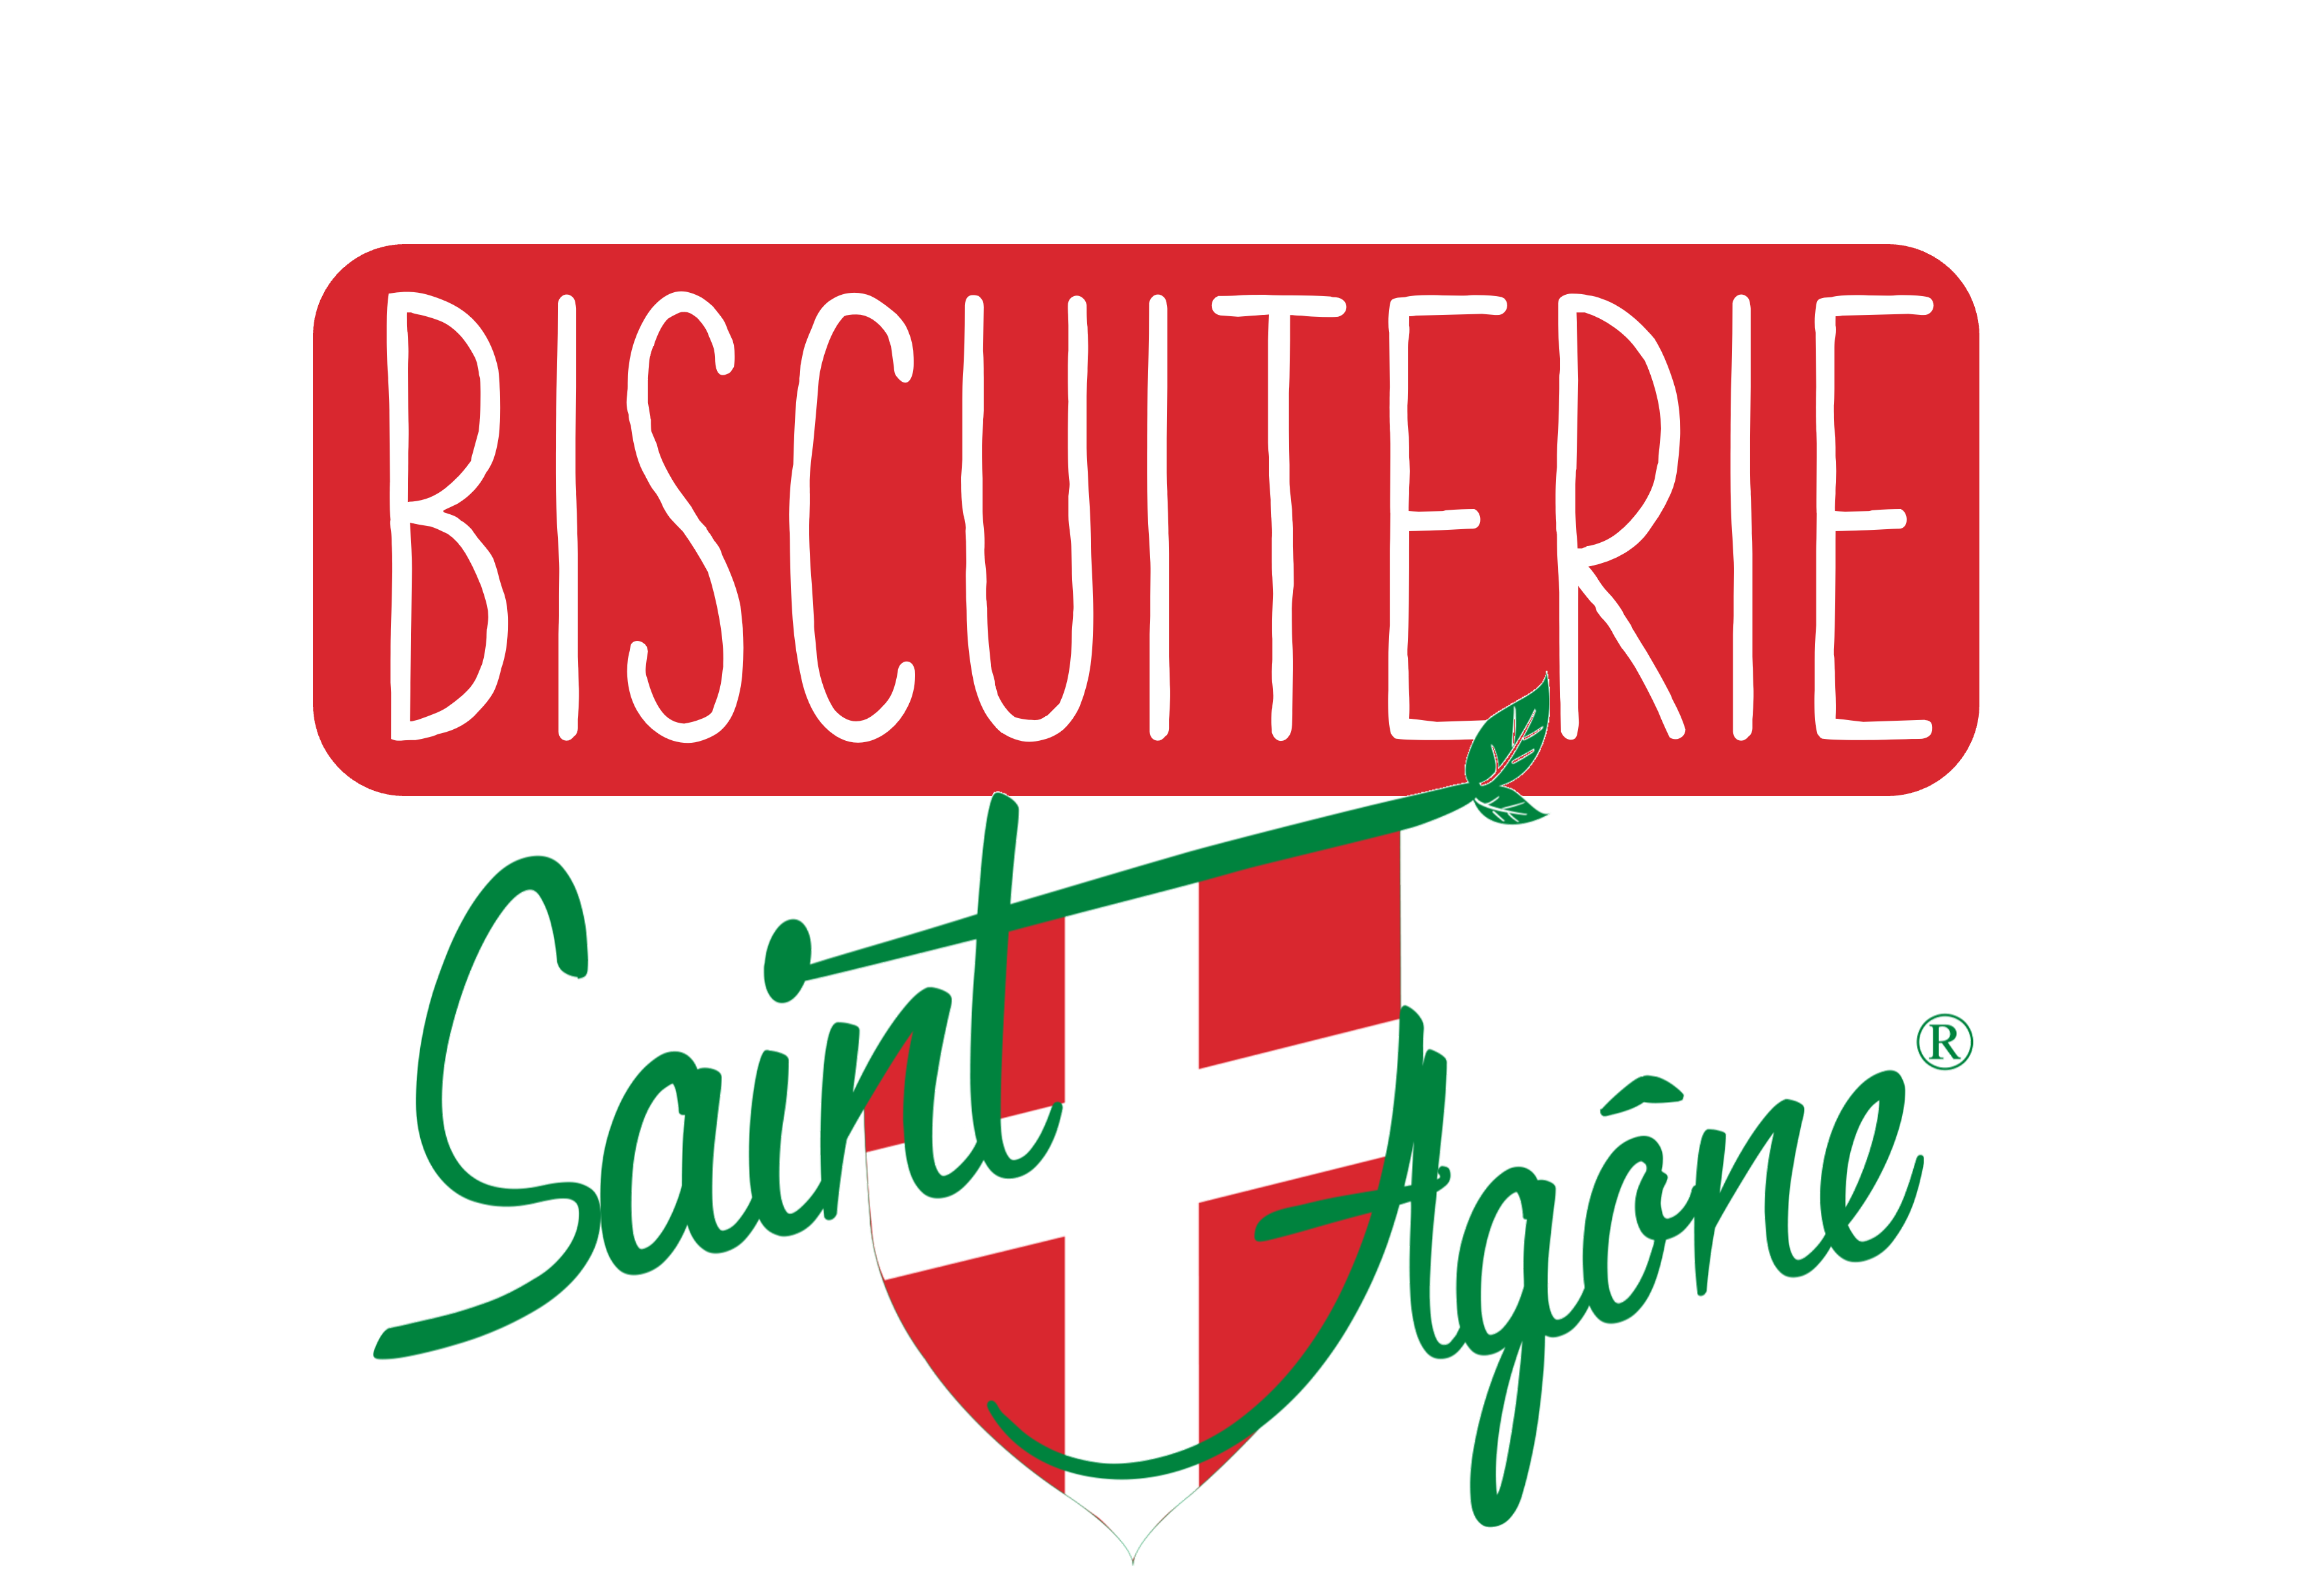 Biscuiterie Saint Agône